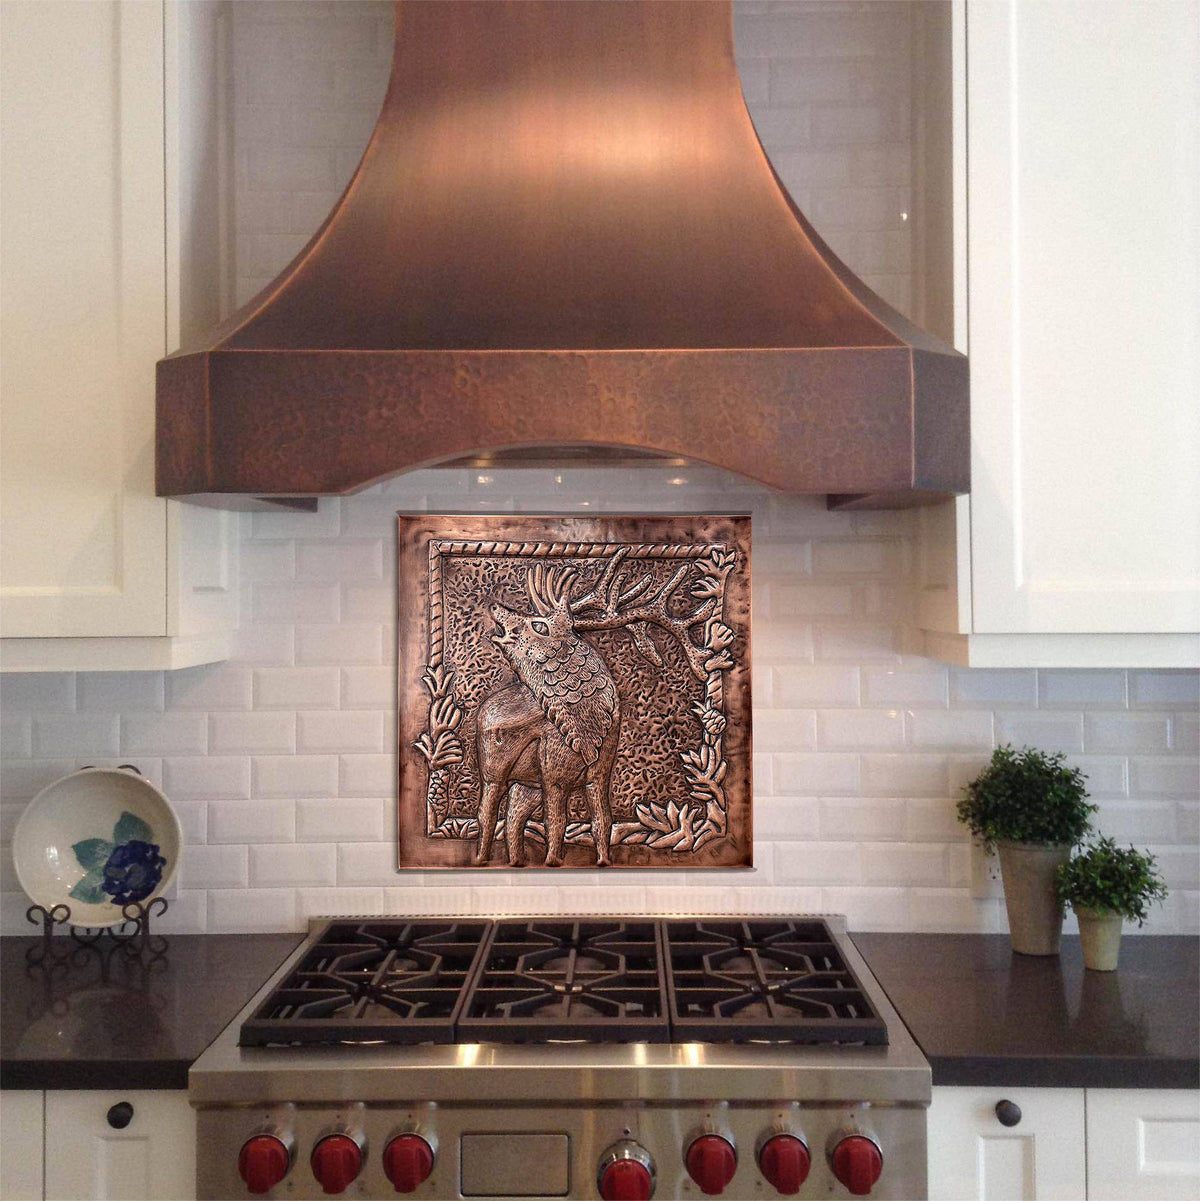 Fobest Handmade Copper Backsplash Kitchen Backsplash Wall Art Deer Design-BK7 - -Fobest Appliance